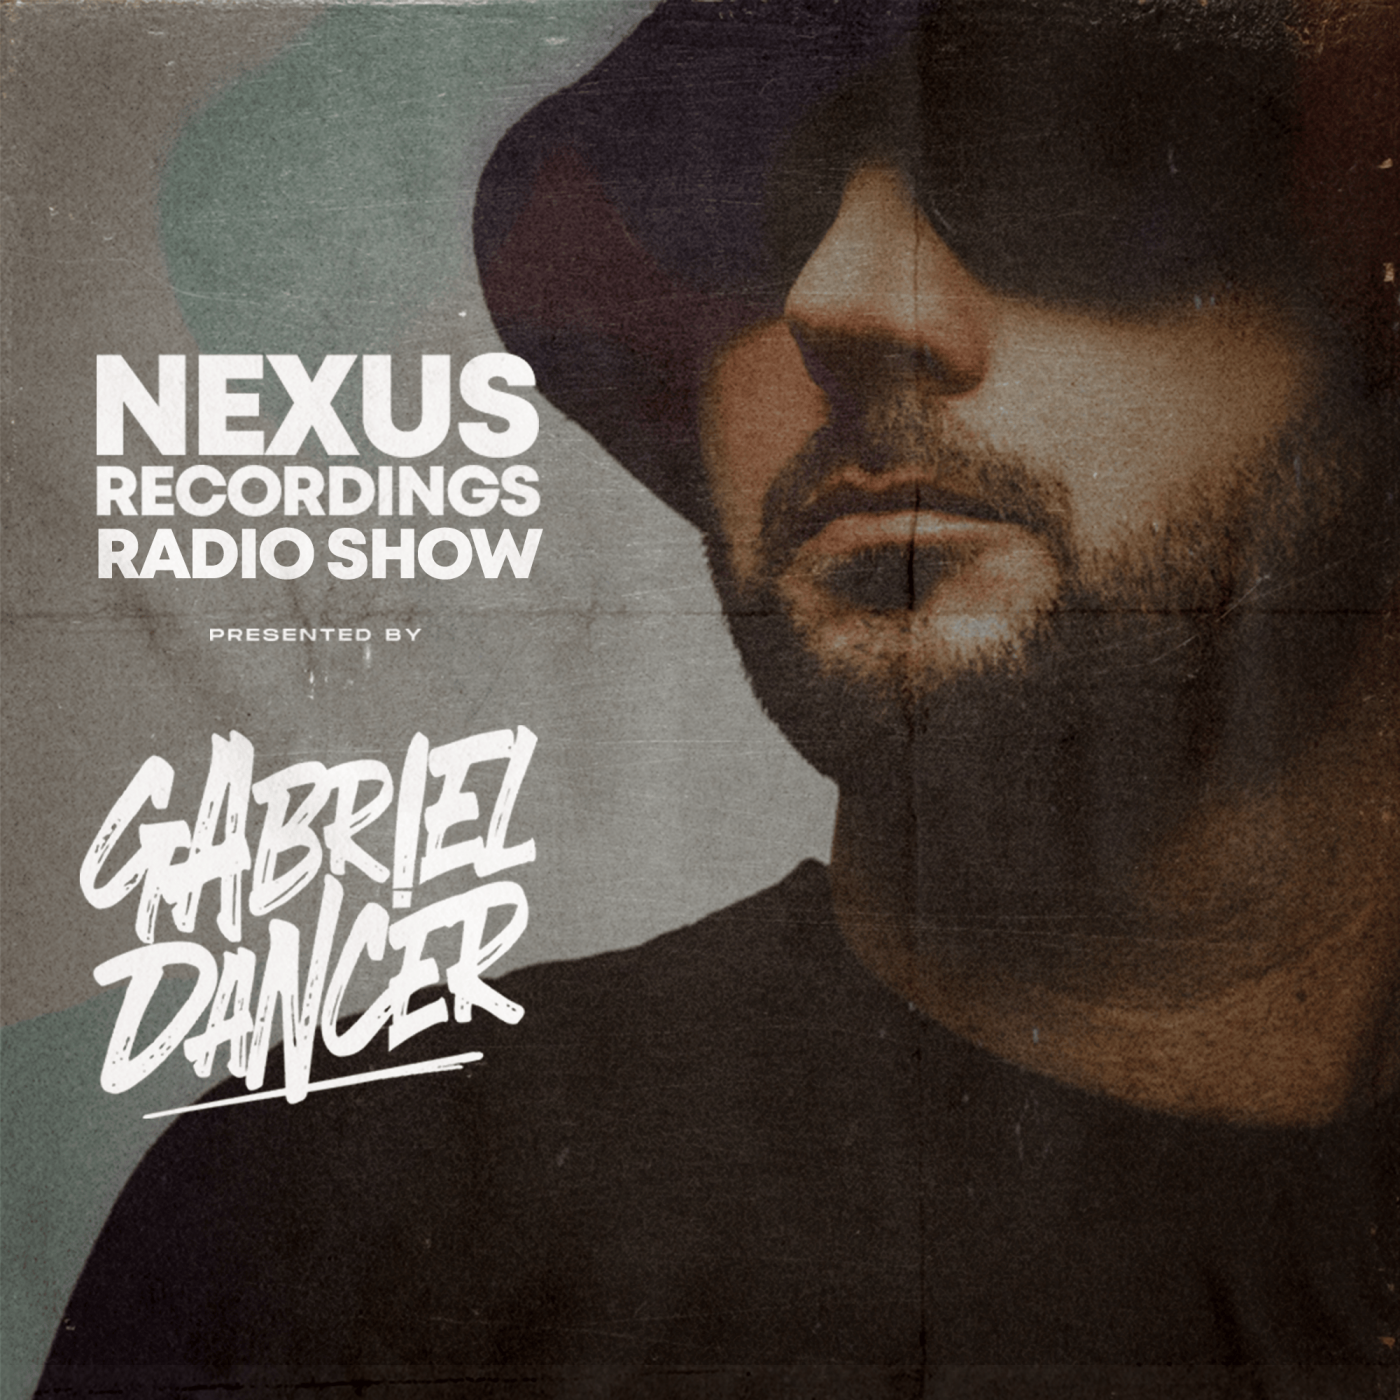 NEXUS Recordings Radio Show 016 | Gabriel Dancer